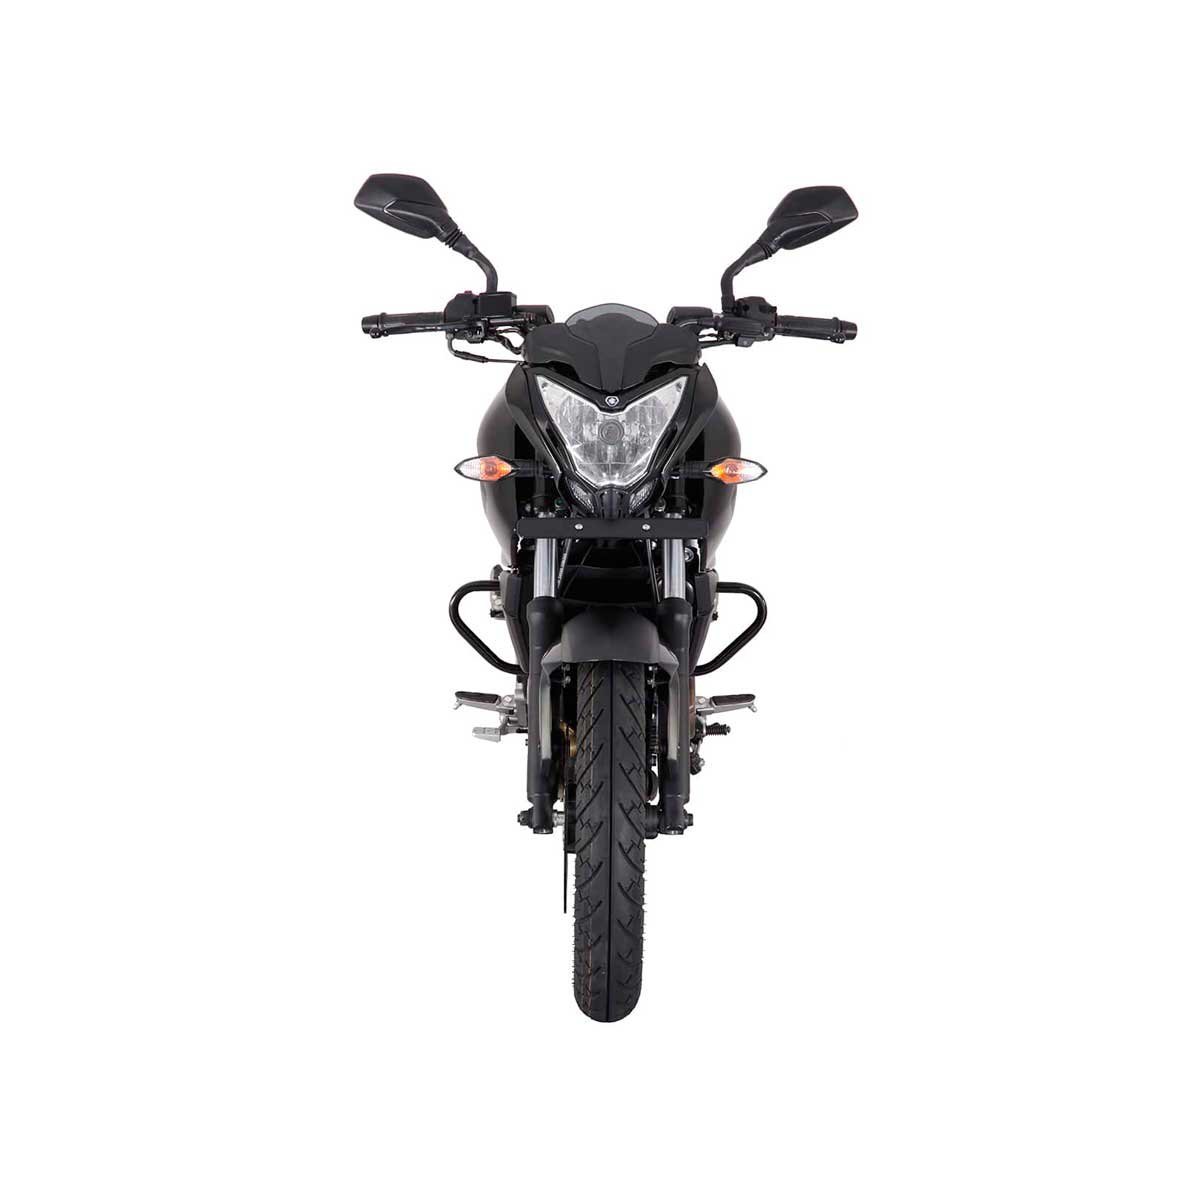 Motocicleta Pulsar Ns 200 Cc Negra Bajaj